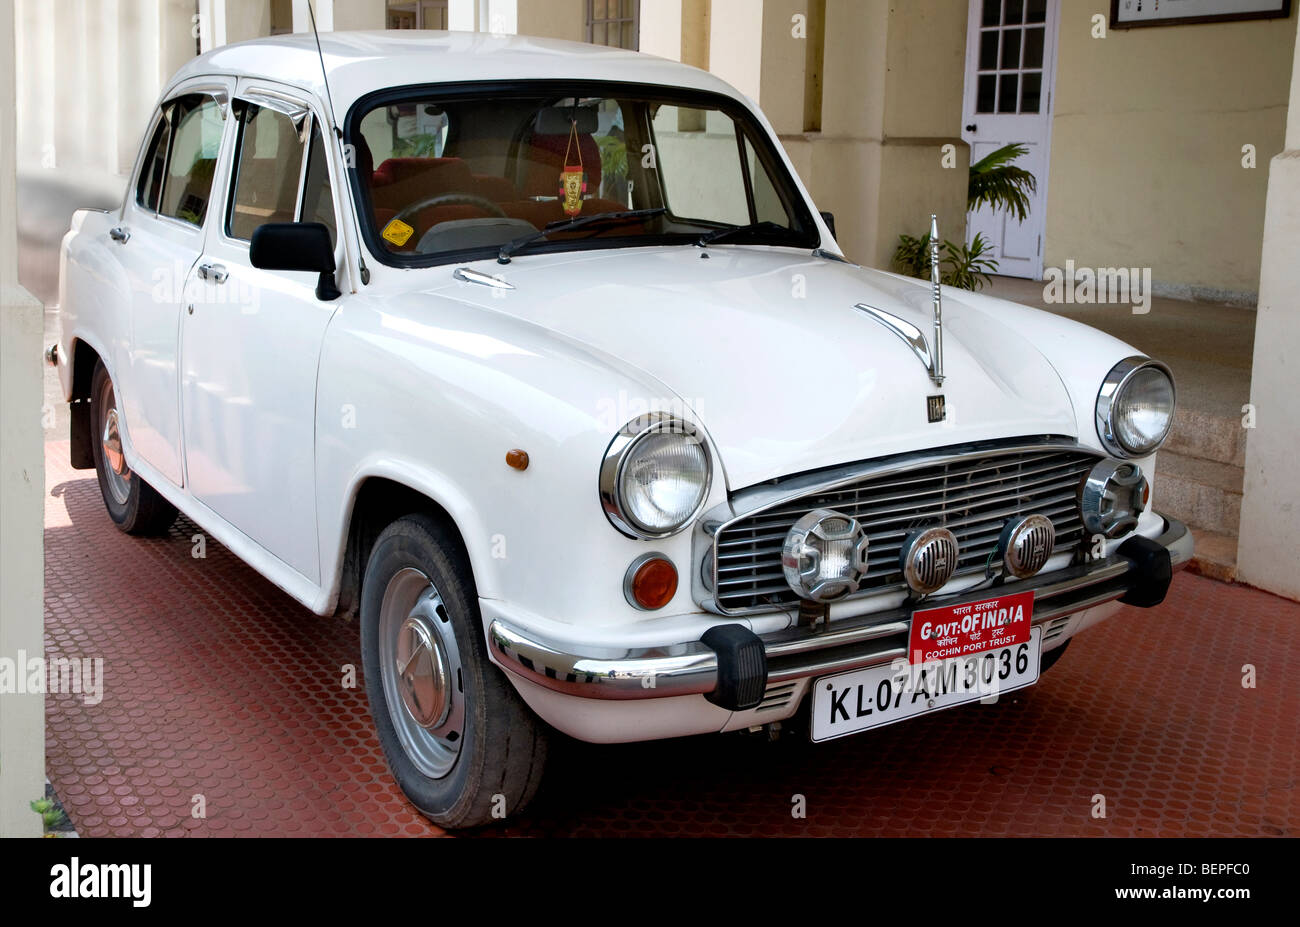 Ambassador car, Cochin, Kerala, India Stock Photo